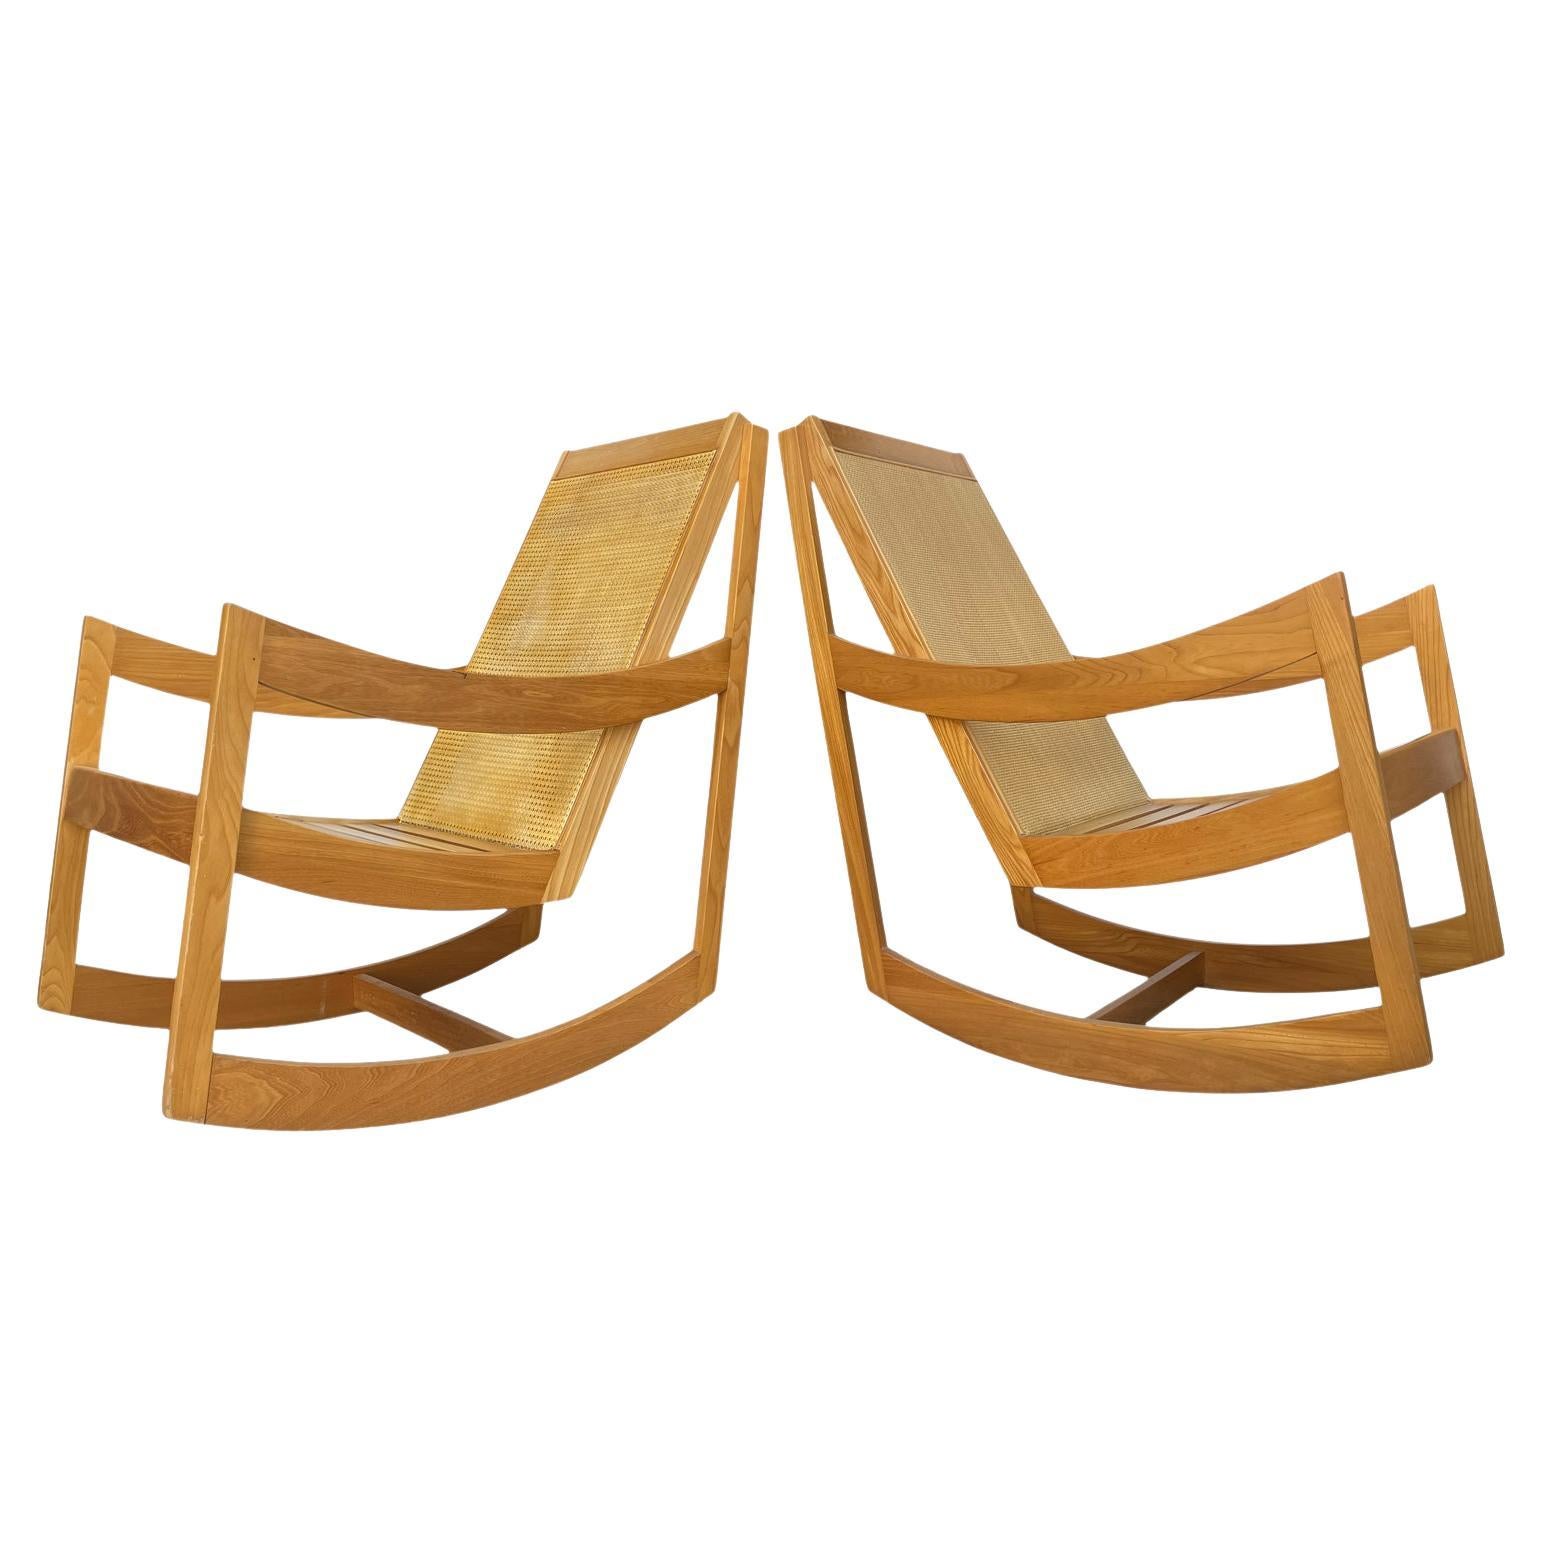 1950s Mid Century Modern Paoli Chair Company Rocking Chair-A Pair